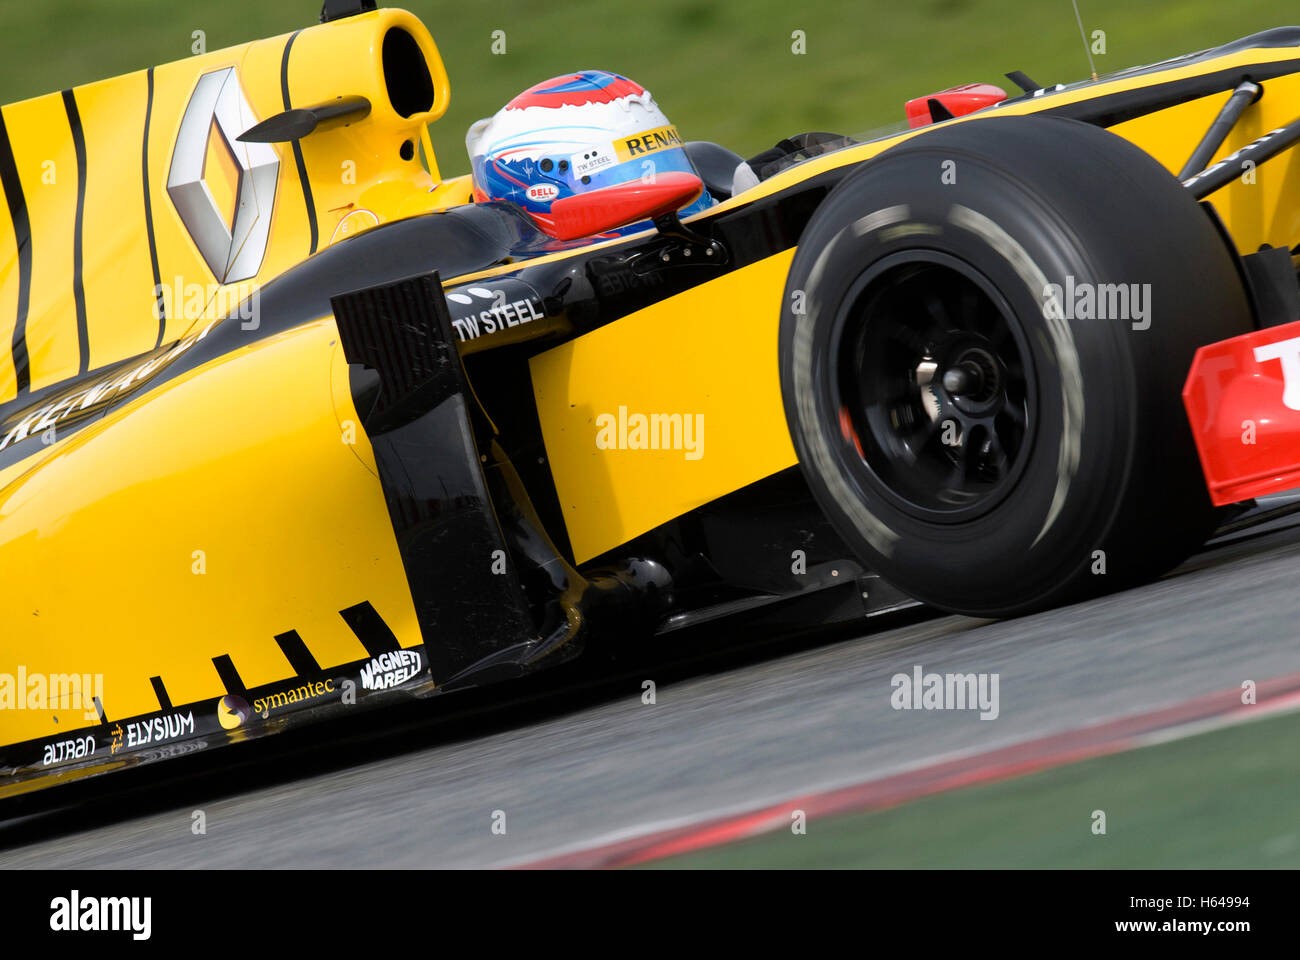 Motorsport, Vitaly Petrov, RUS, im Renault R30 Rennwagen, Formel-1-Tests auf dem Circuit de Catalunya Rennen verfolgen in Stockfoto